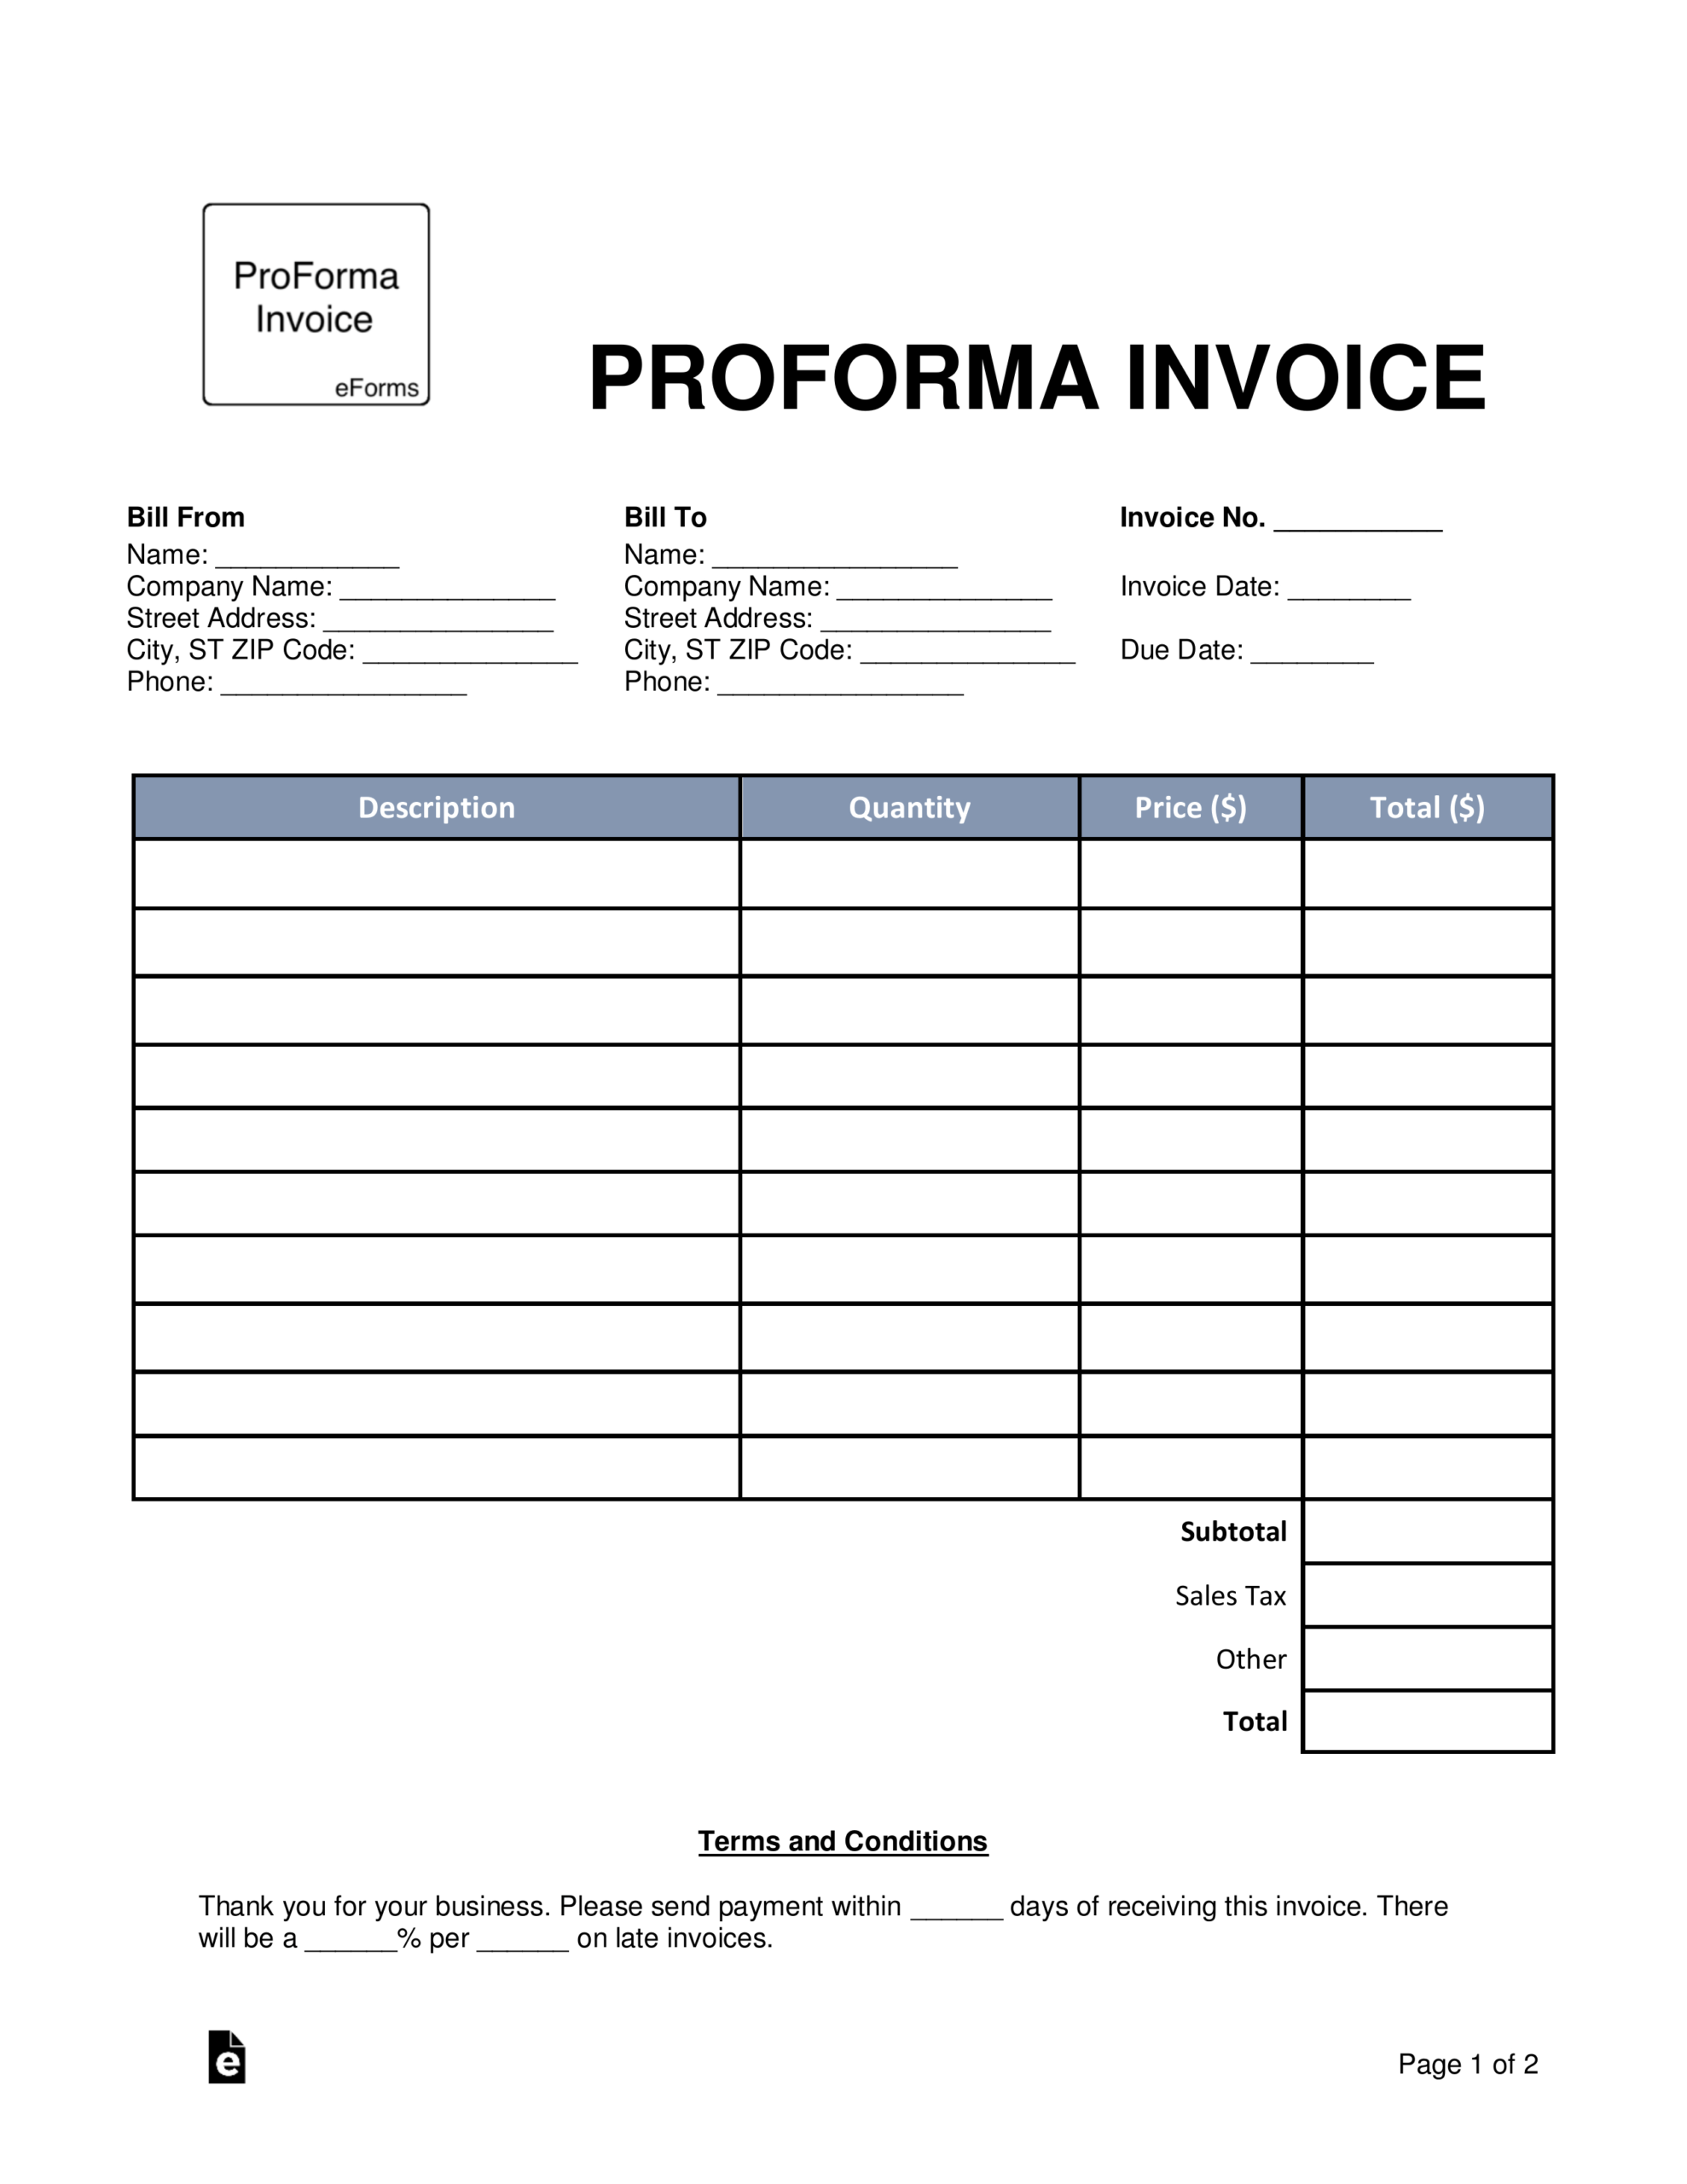 Free Proforma Invoice Template – Word | Pdf | Eforms – Free Throughout Free Proforma Invoice Template Word